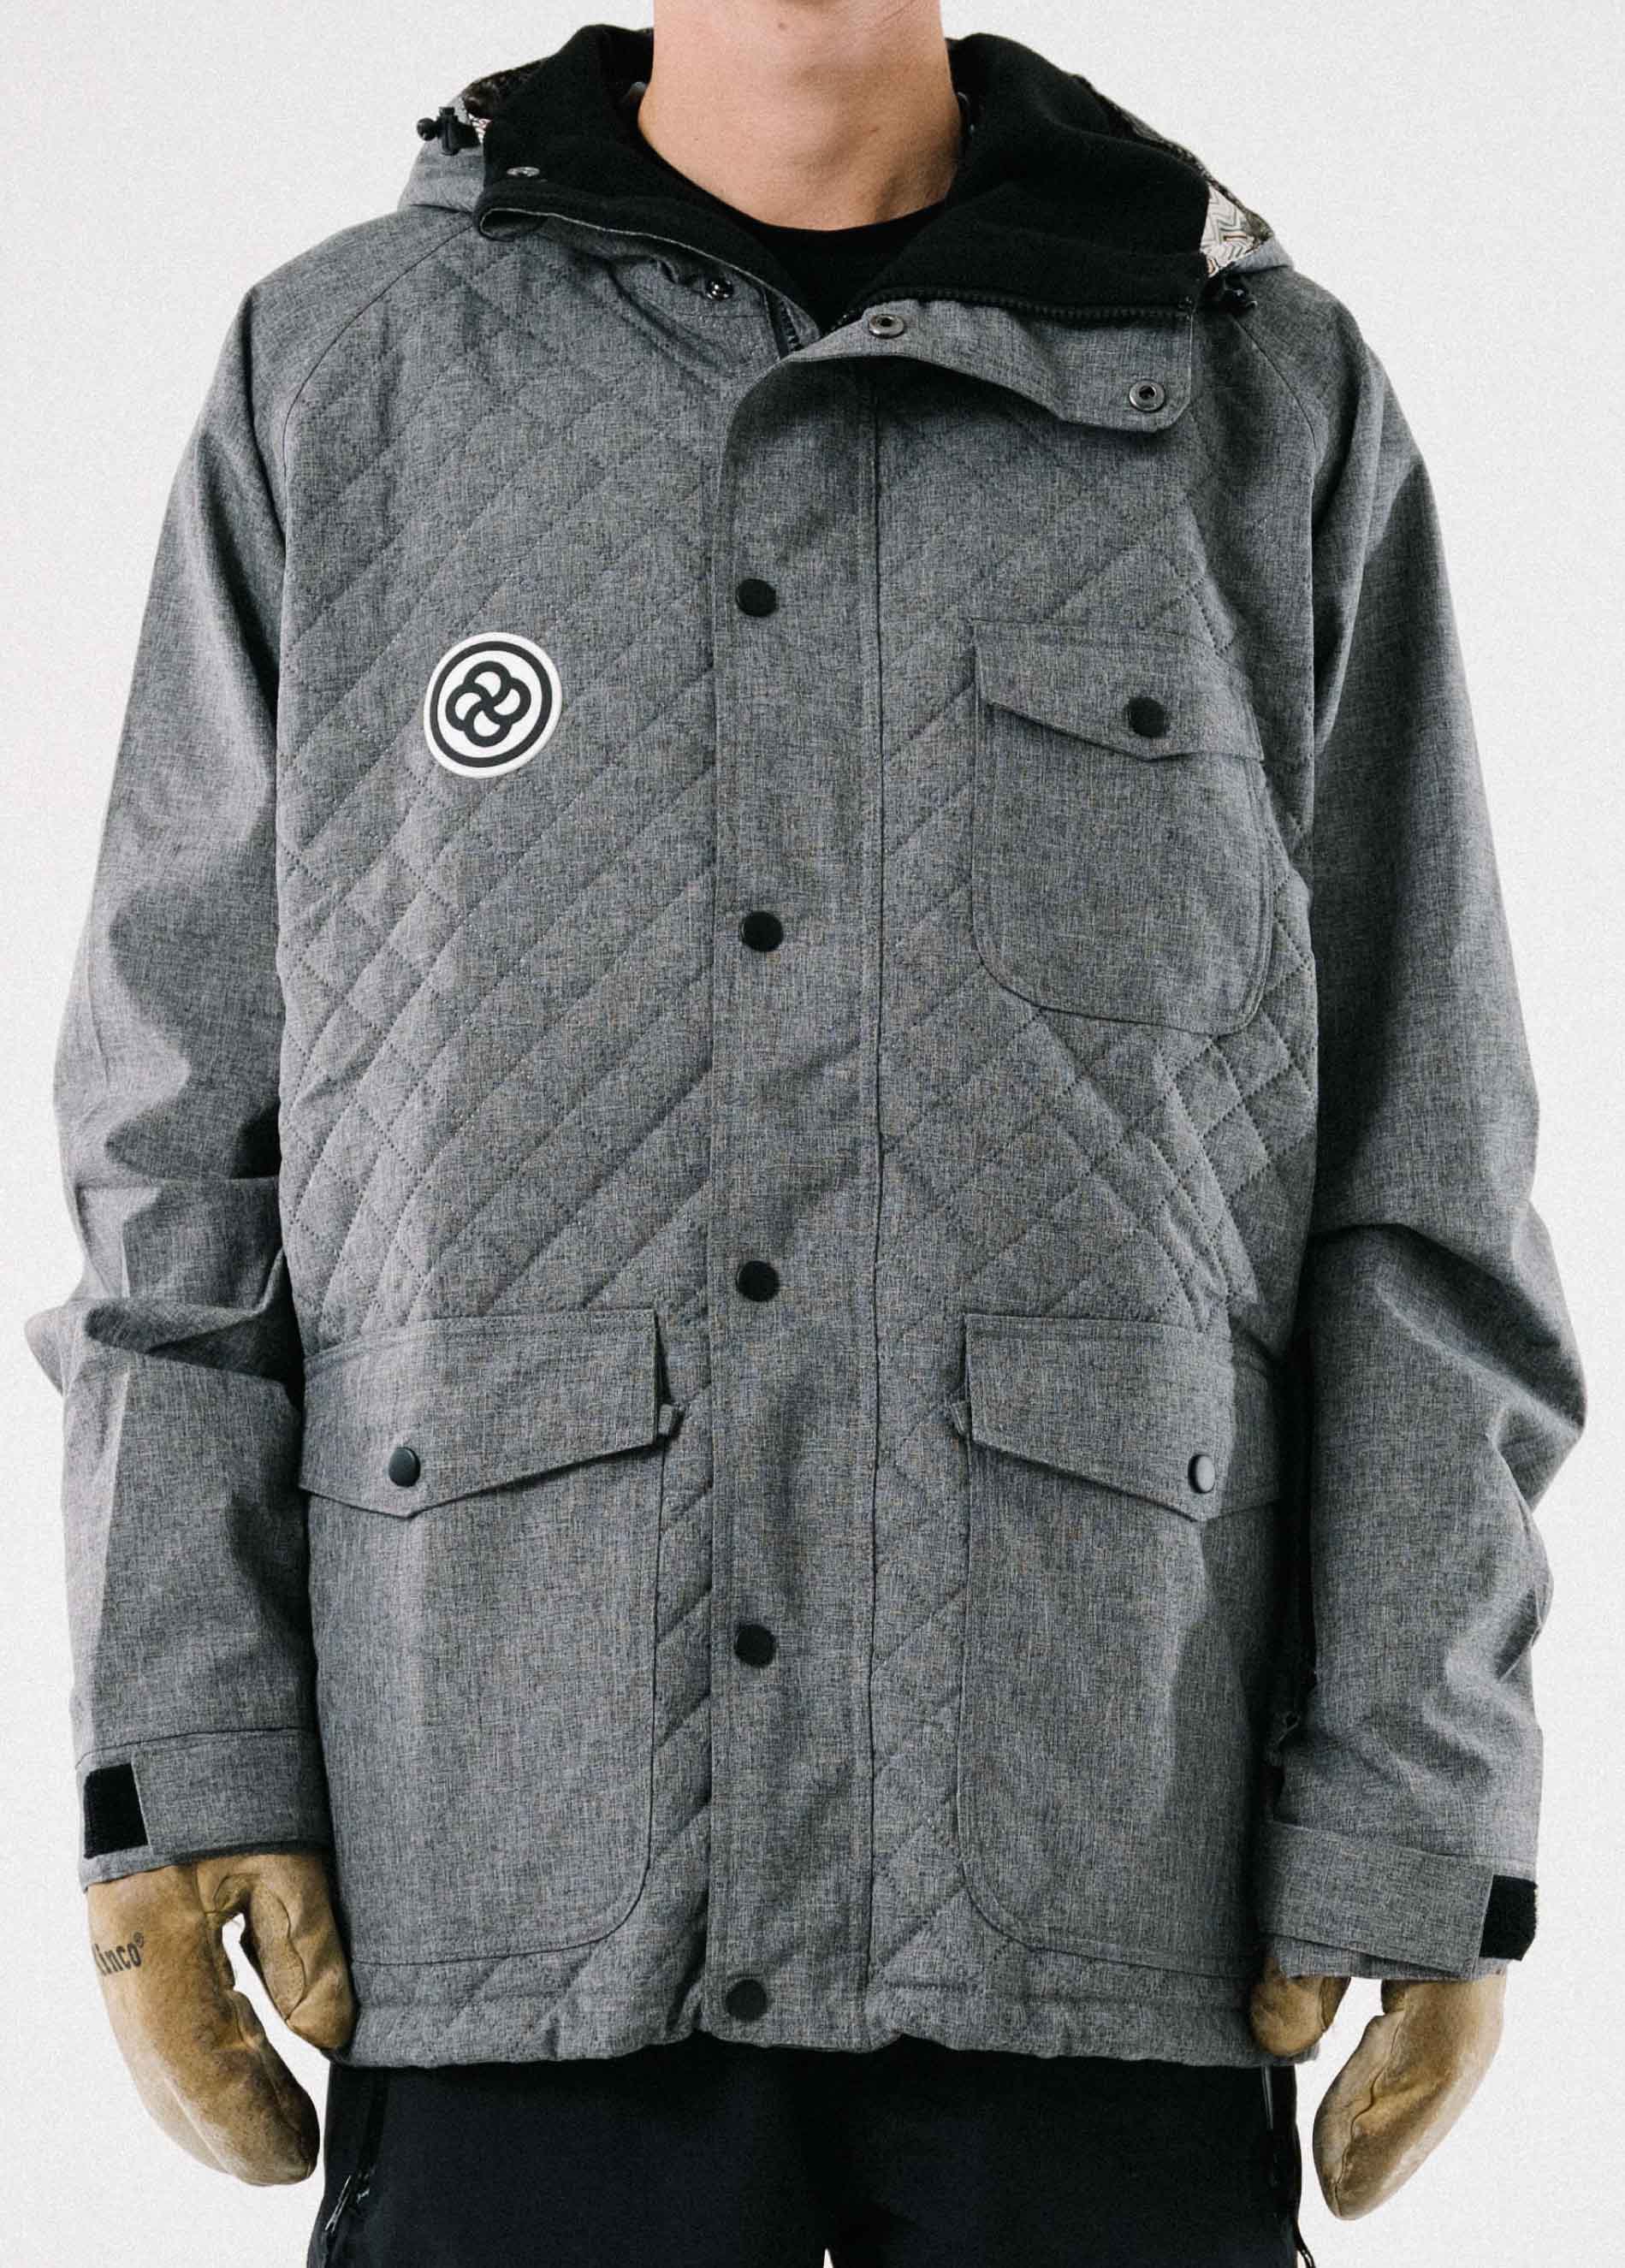 Mens Insulated Waterproof Ski Jacket Gray - Bloom Outerwear